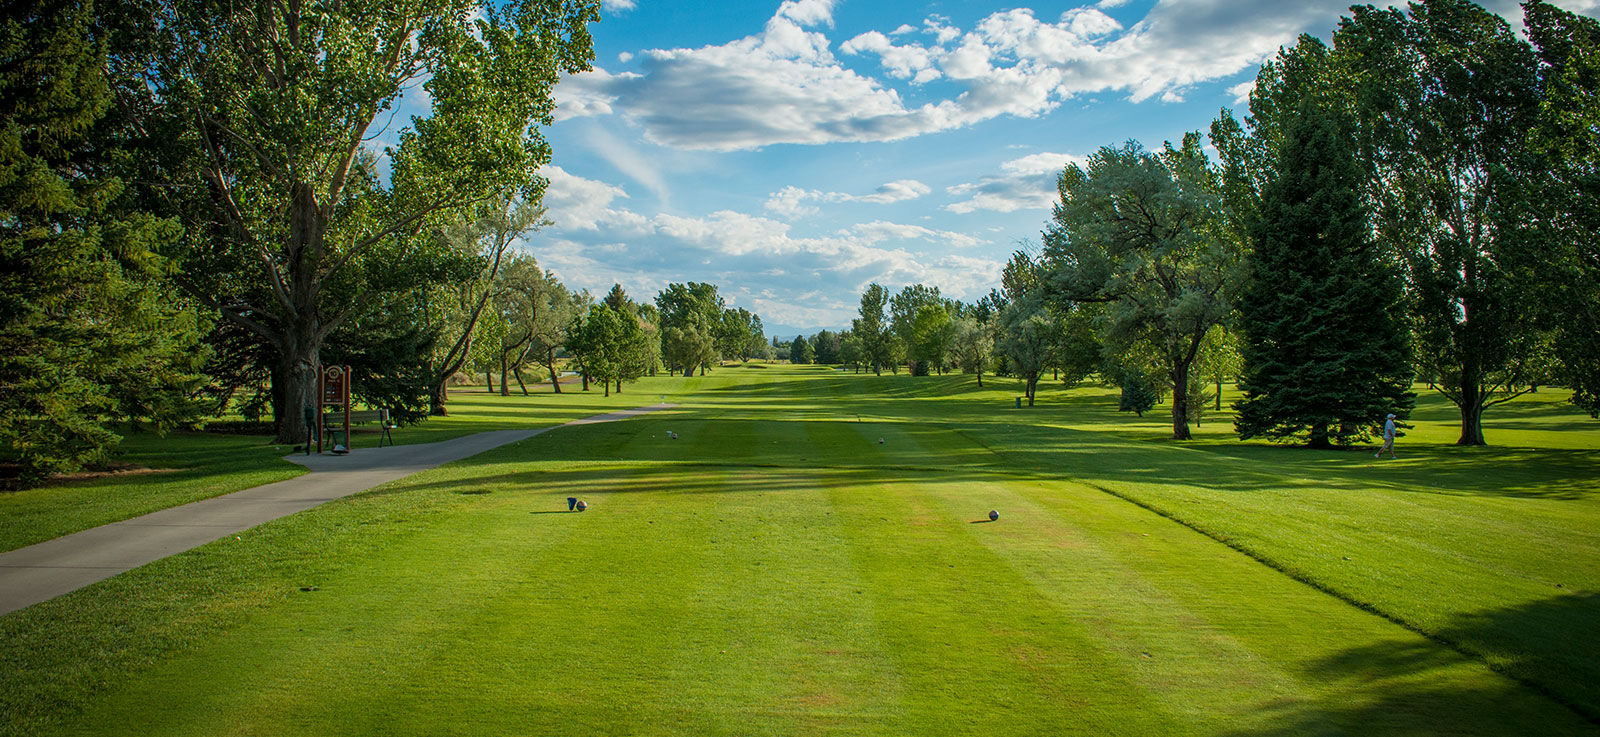 Laurel Golf Club | Golf Course and Restaurant Laurel Montana